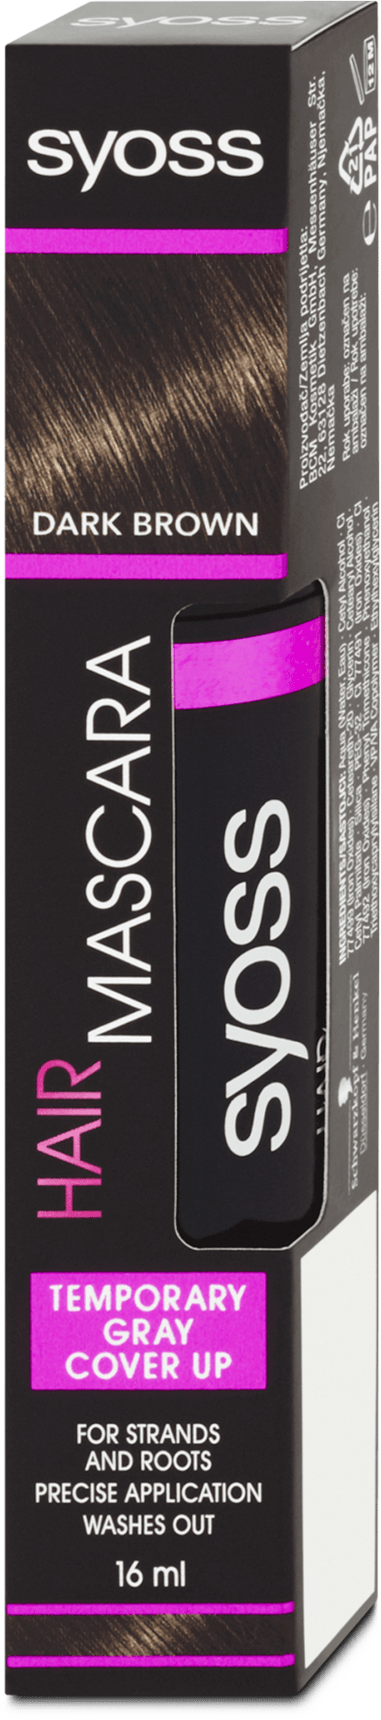 Syoss dark brown hair mascara, 16 ml